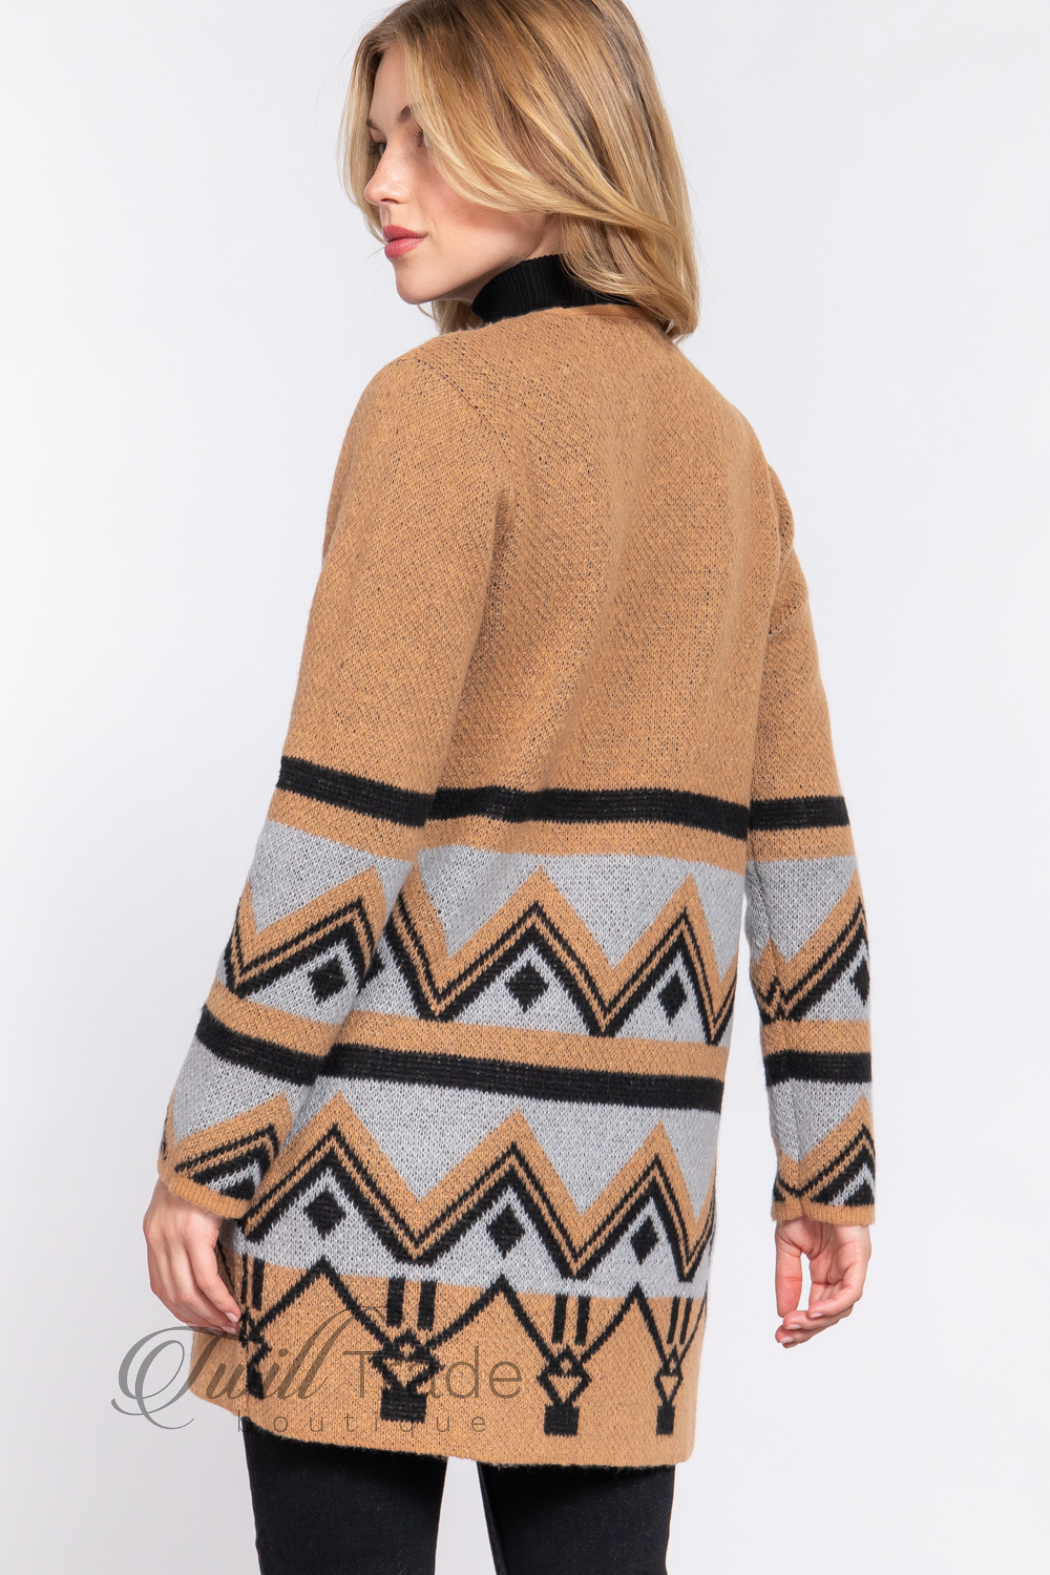 Tribal Jacquard Sweater Cardigan